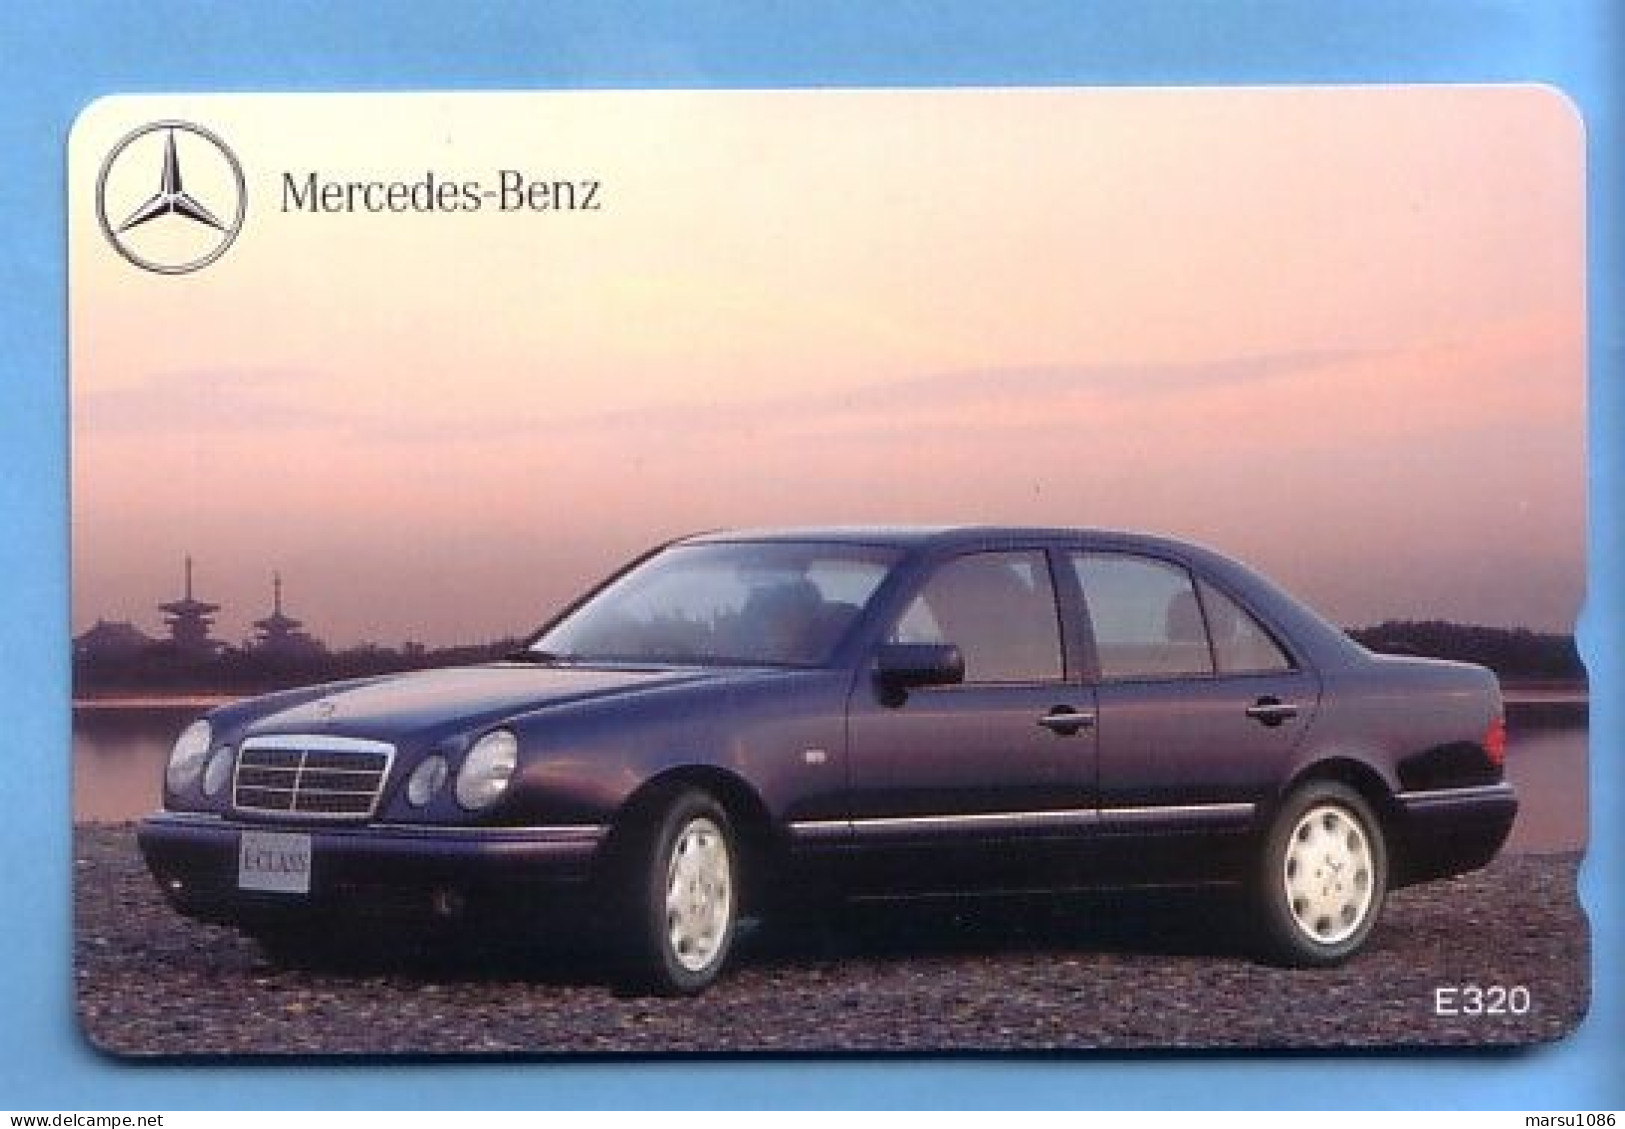 Japan Japon Telefonkarte Télécarte Phonecard Telefoonkaart -  Auto Car  Mercedes Benz - Coches